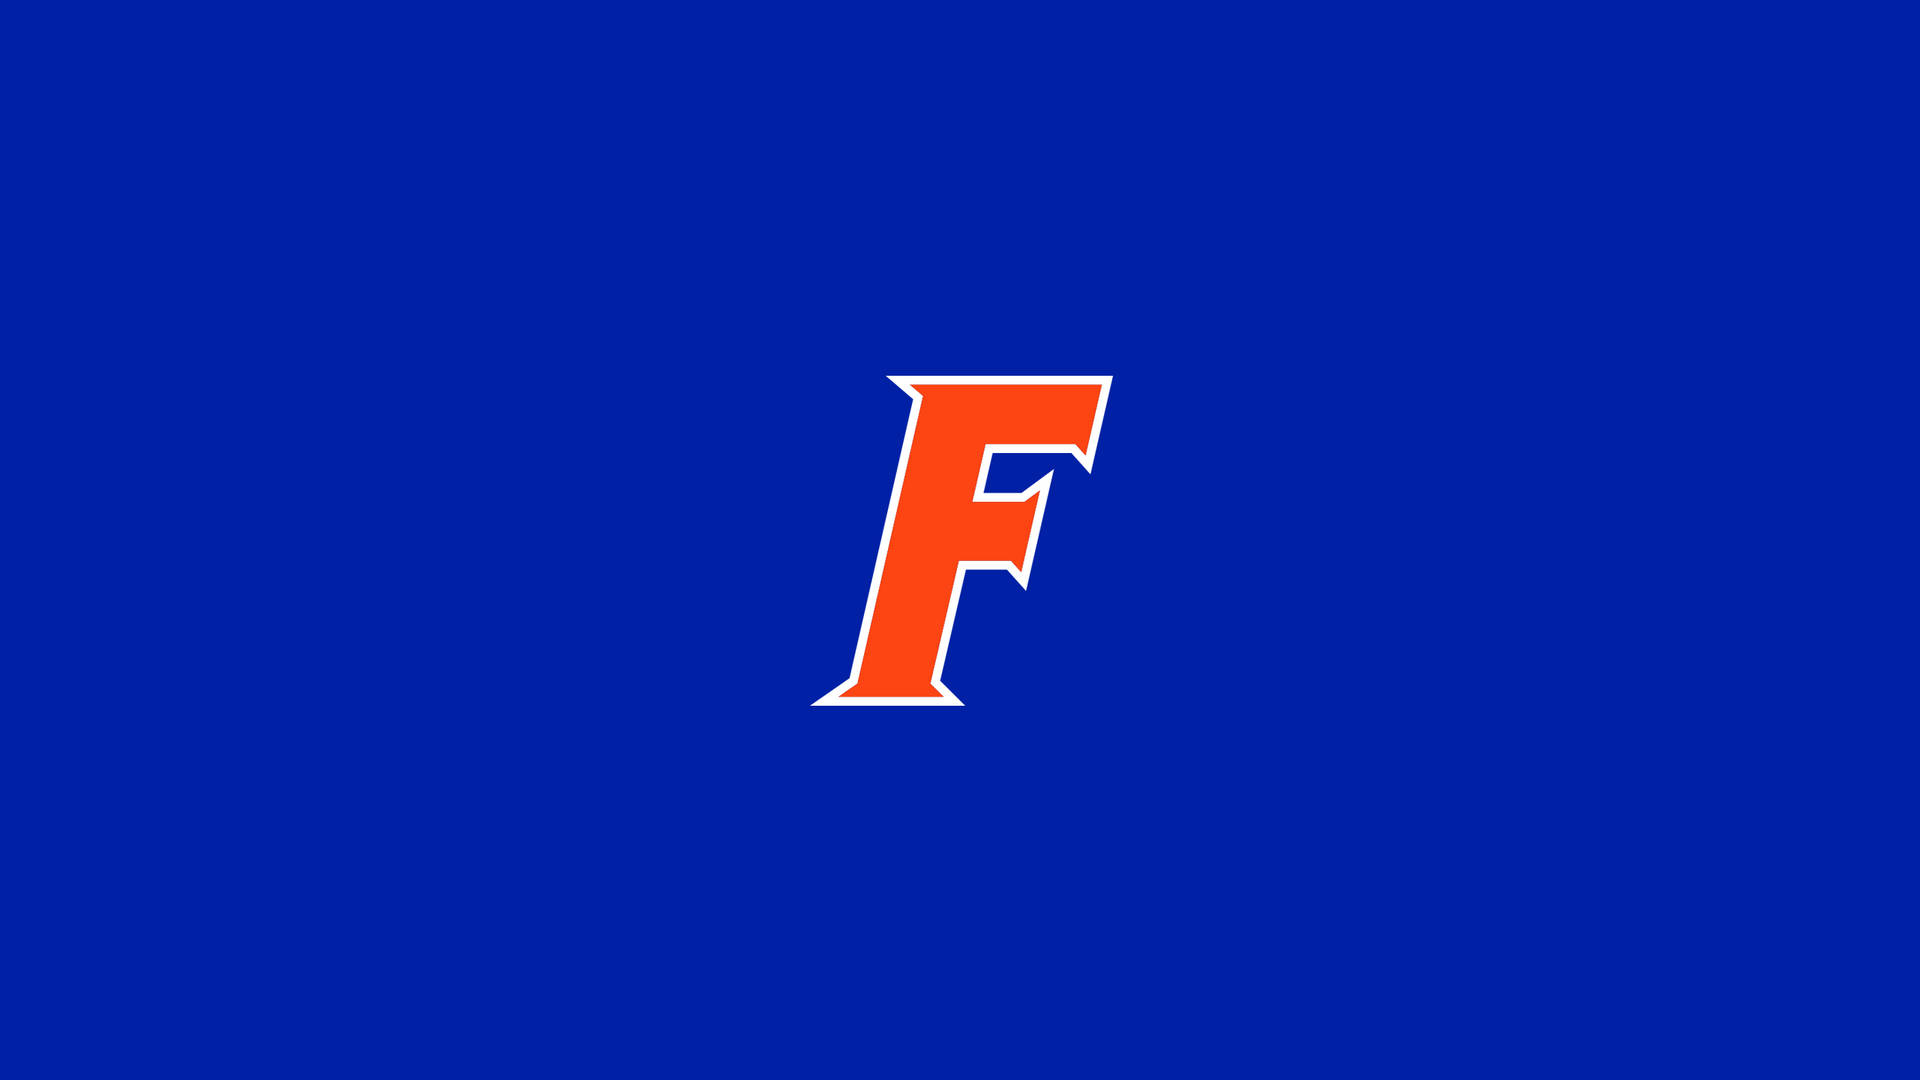 Universitätvon Florida F-logo Wallpaper